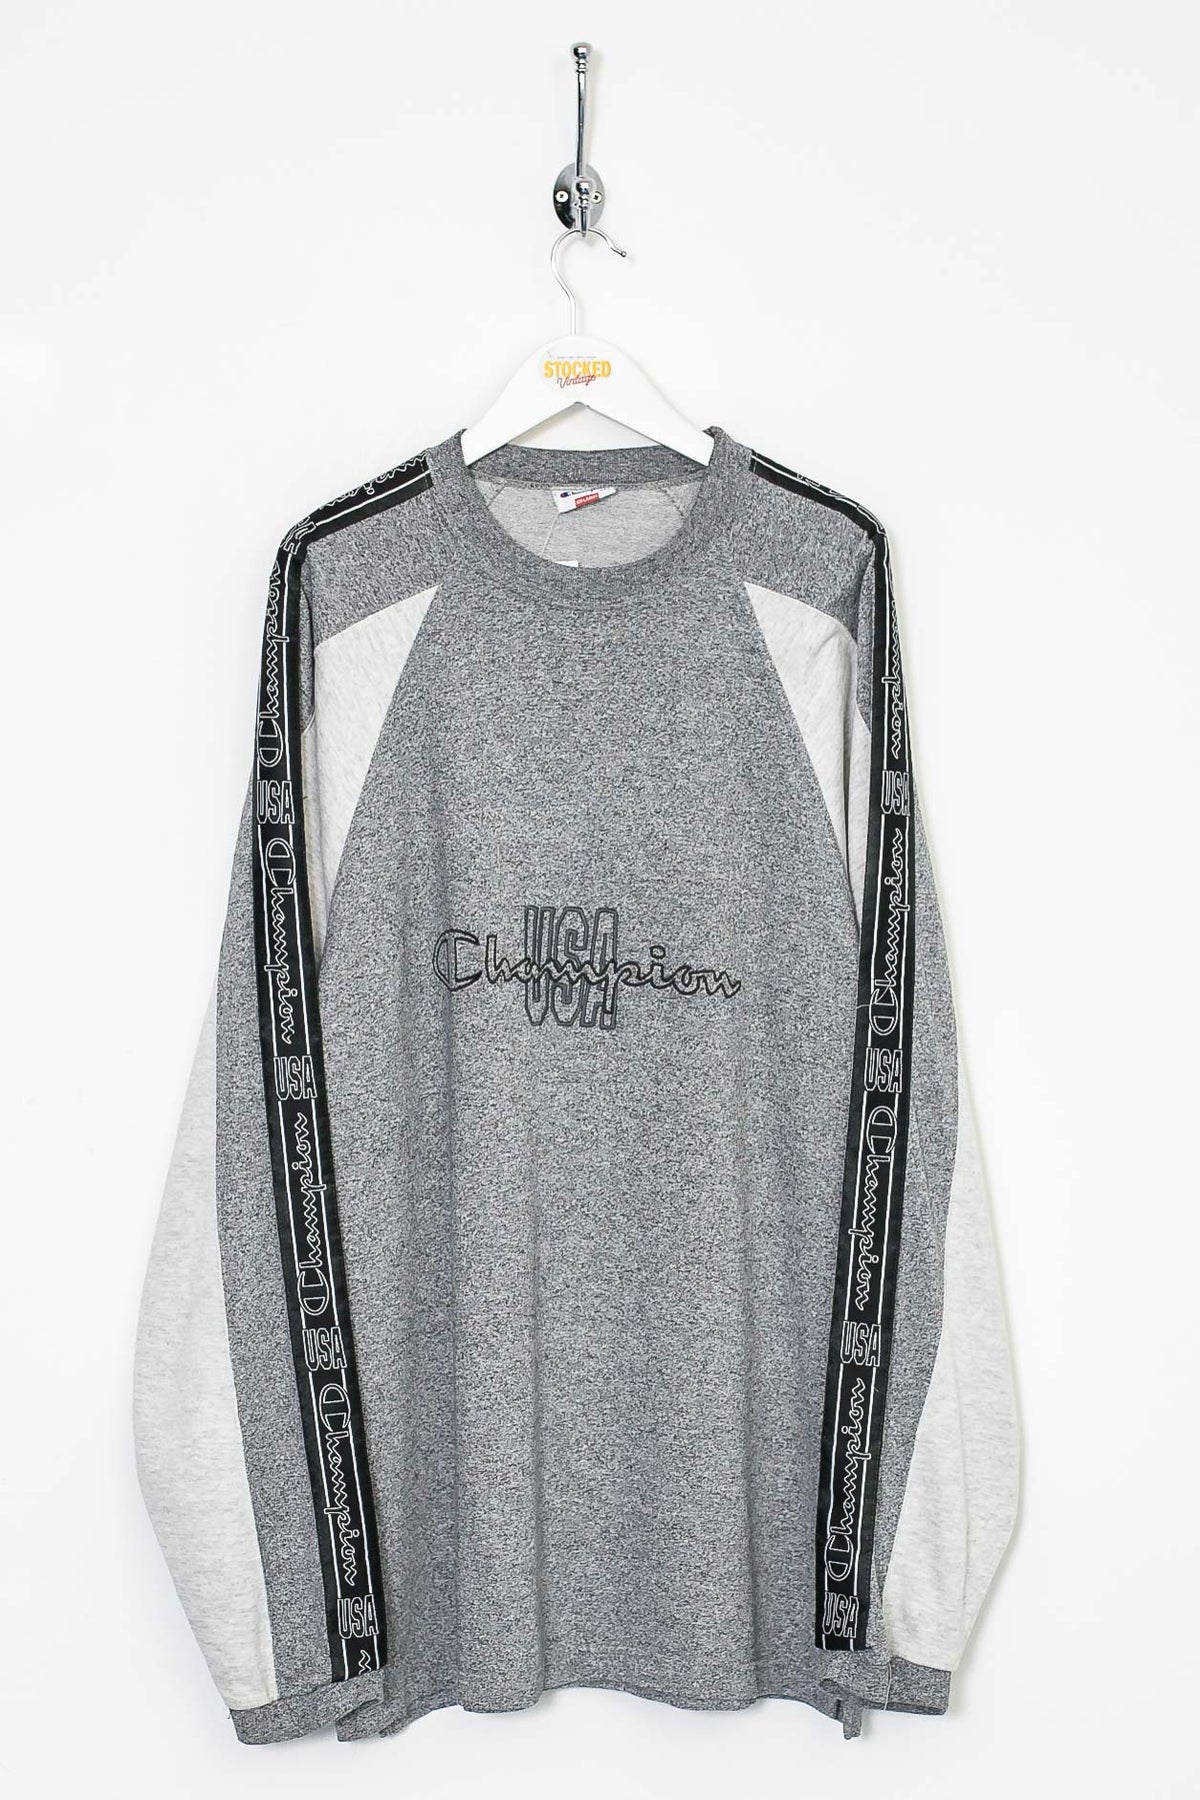 00s Champion Sweatshirt (XL)